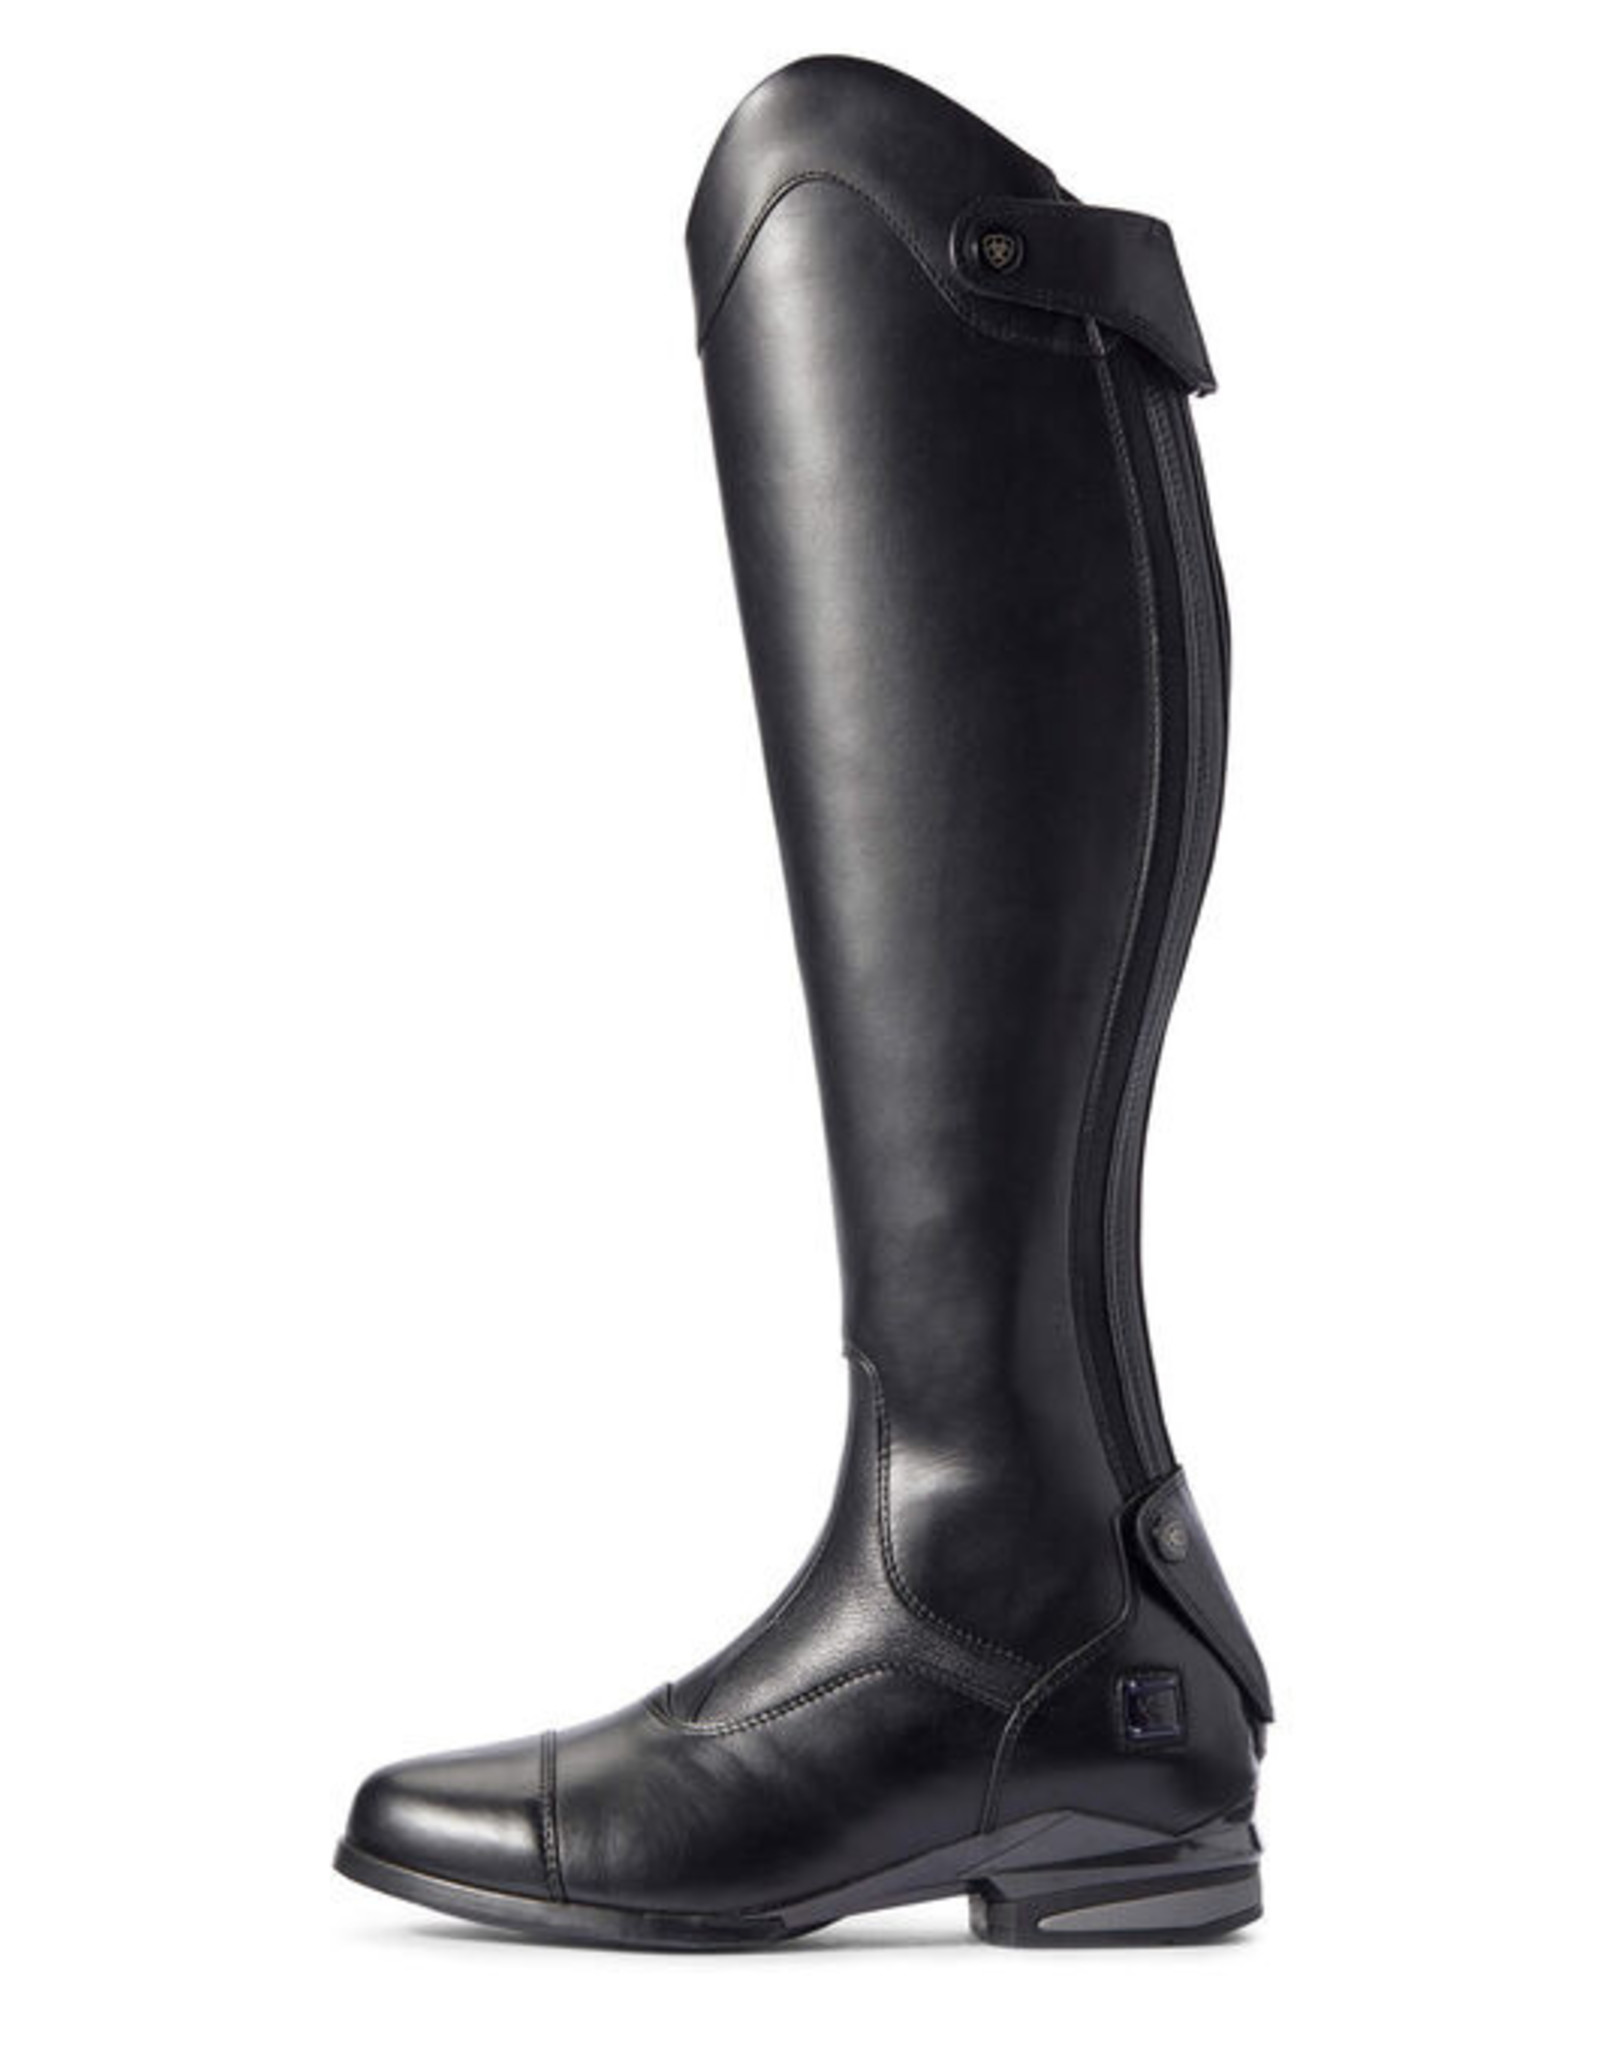 Ariat Mens' Nitro Max Dress Boot